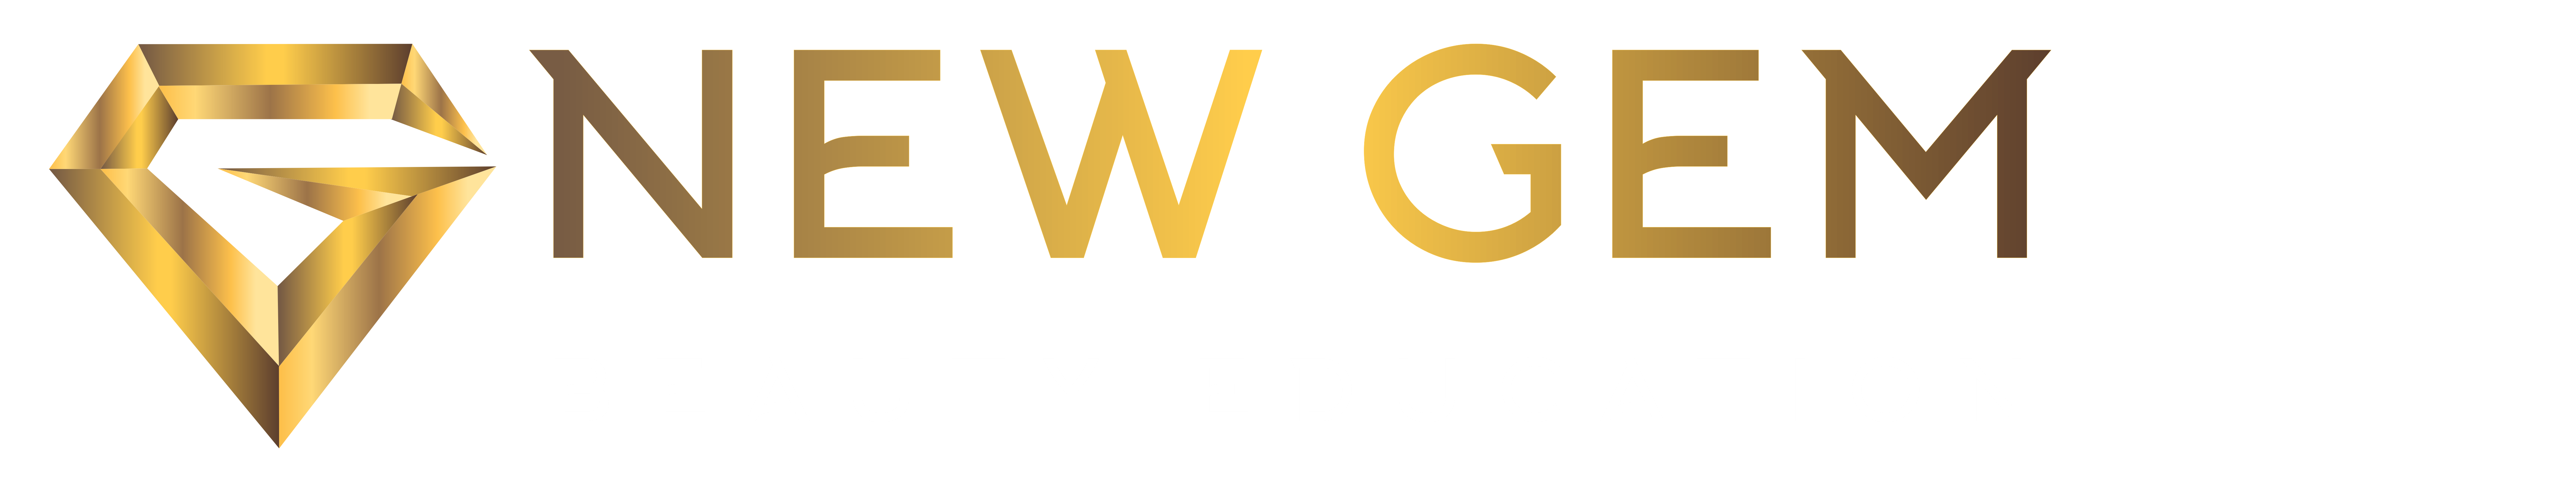 New Gem School